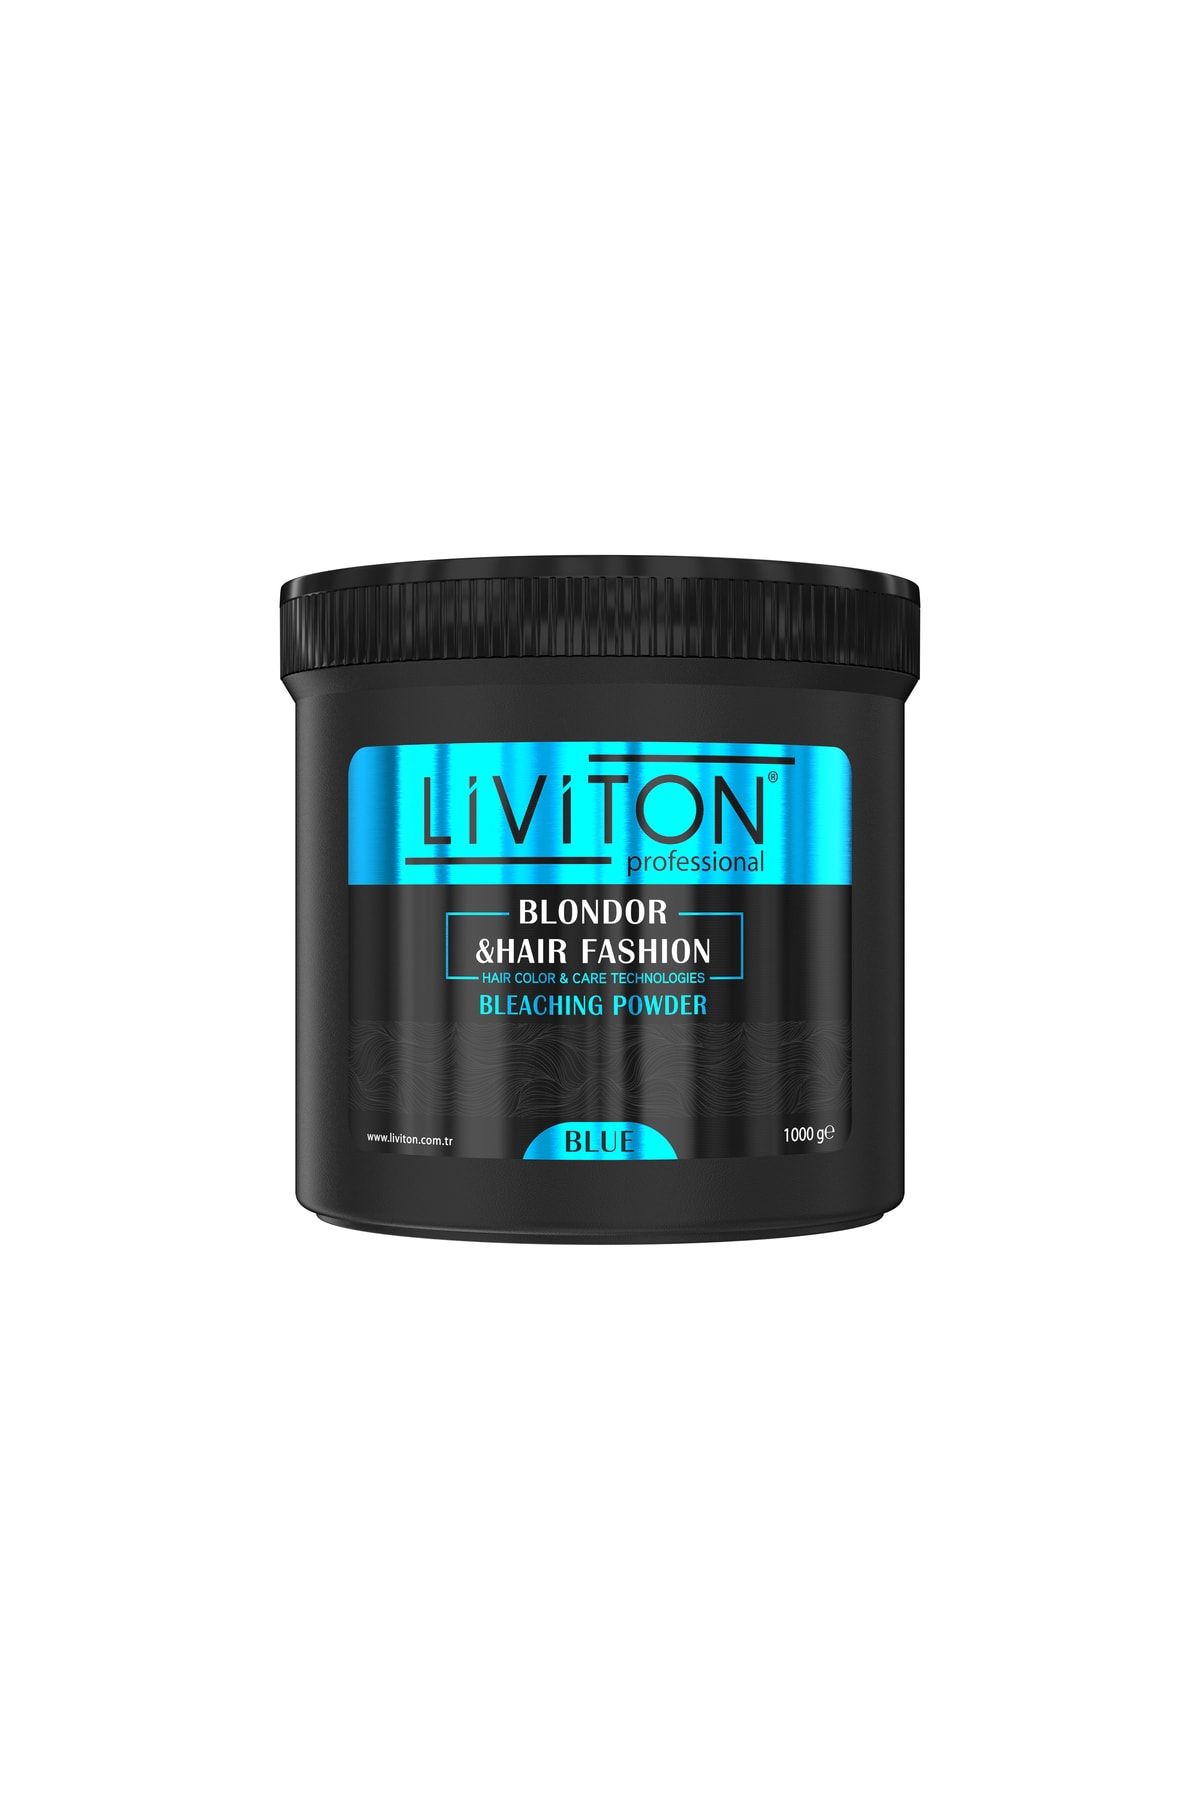 Liviton Professional Toz Açıcı Blue 1000gr (blonder Bleanching Powder)